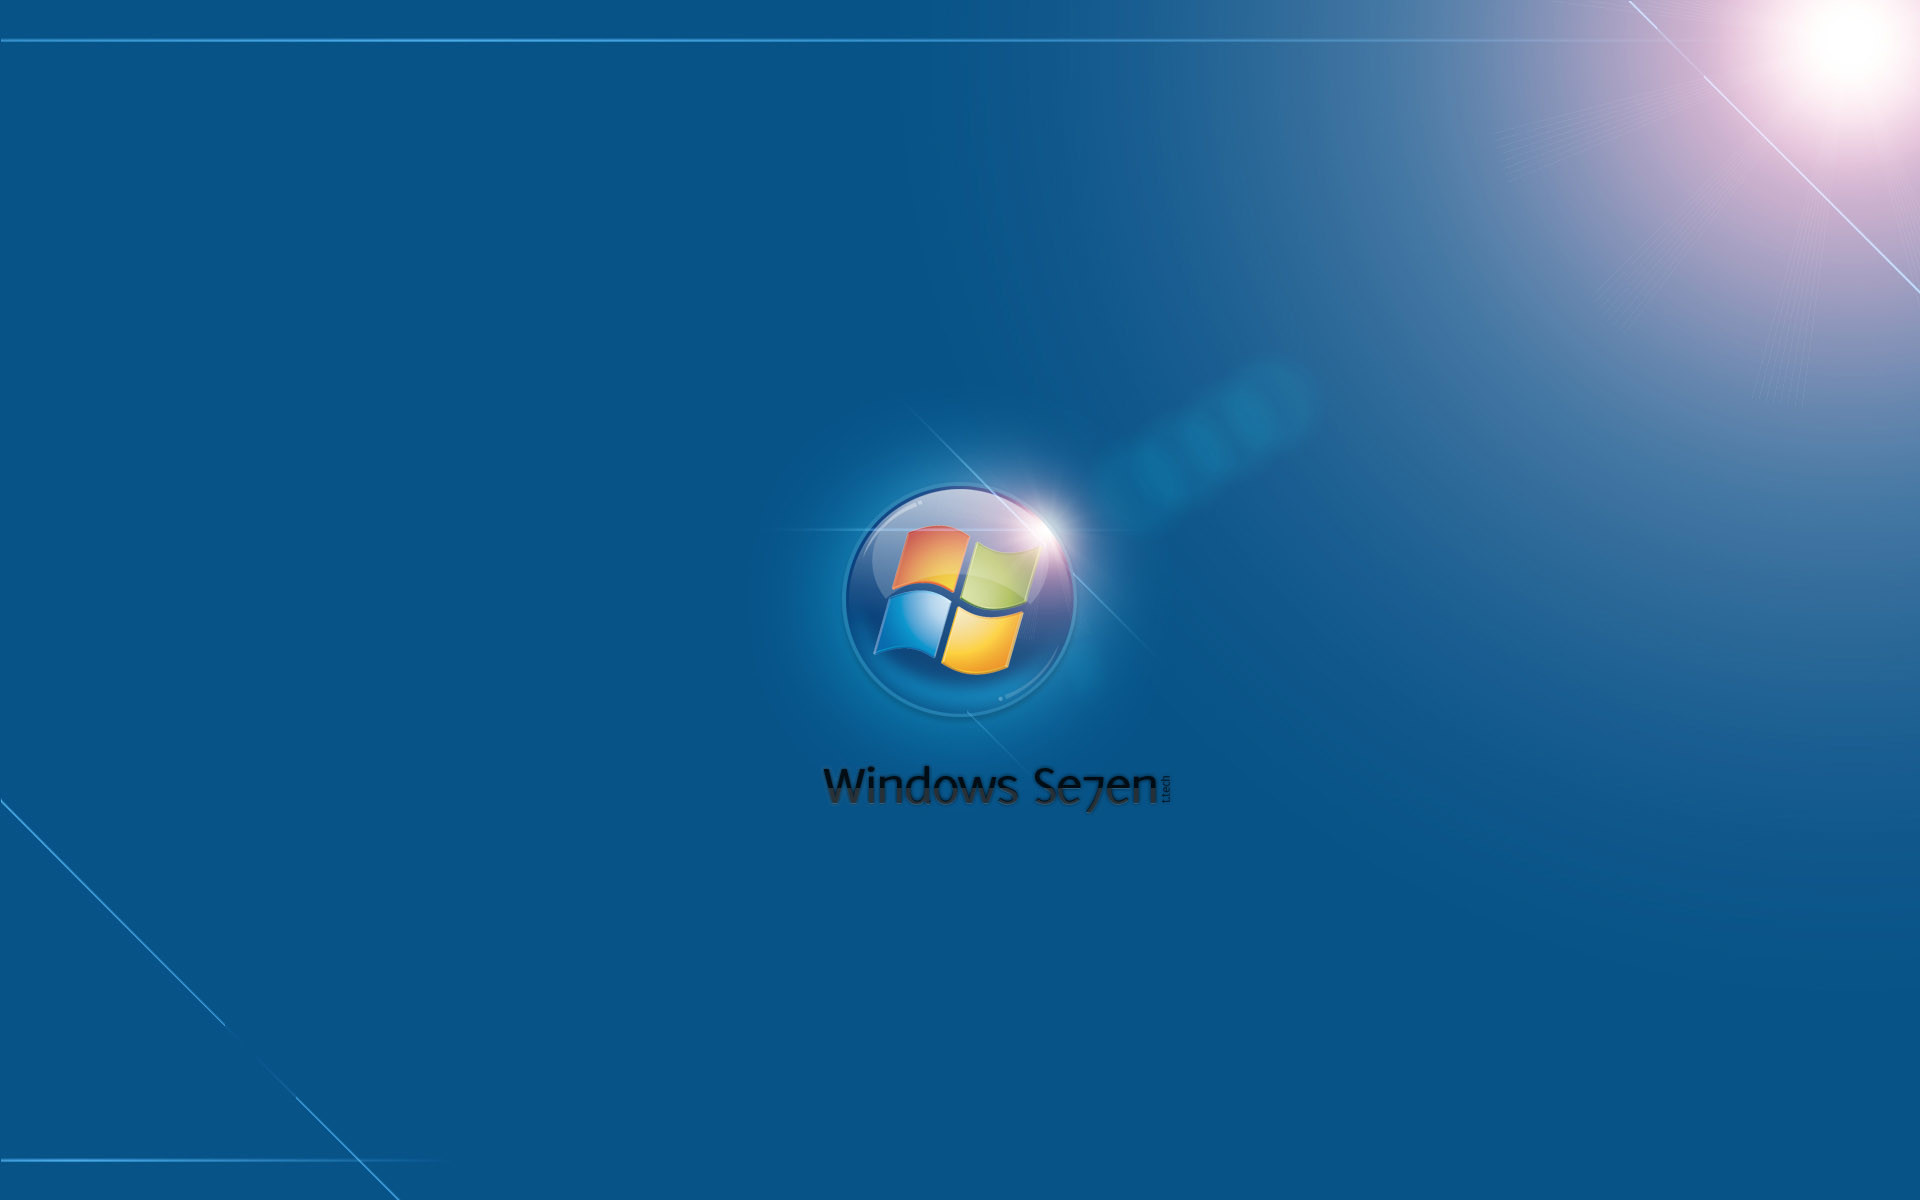 1920x1200 wallpaper: Wallpaper Hd Desktop Windows Desktop Backgrounds For Windows 7  HD Wallpapers)